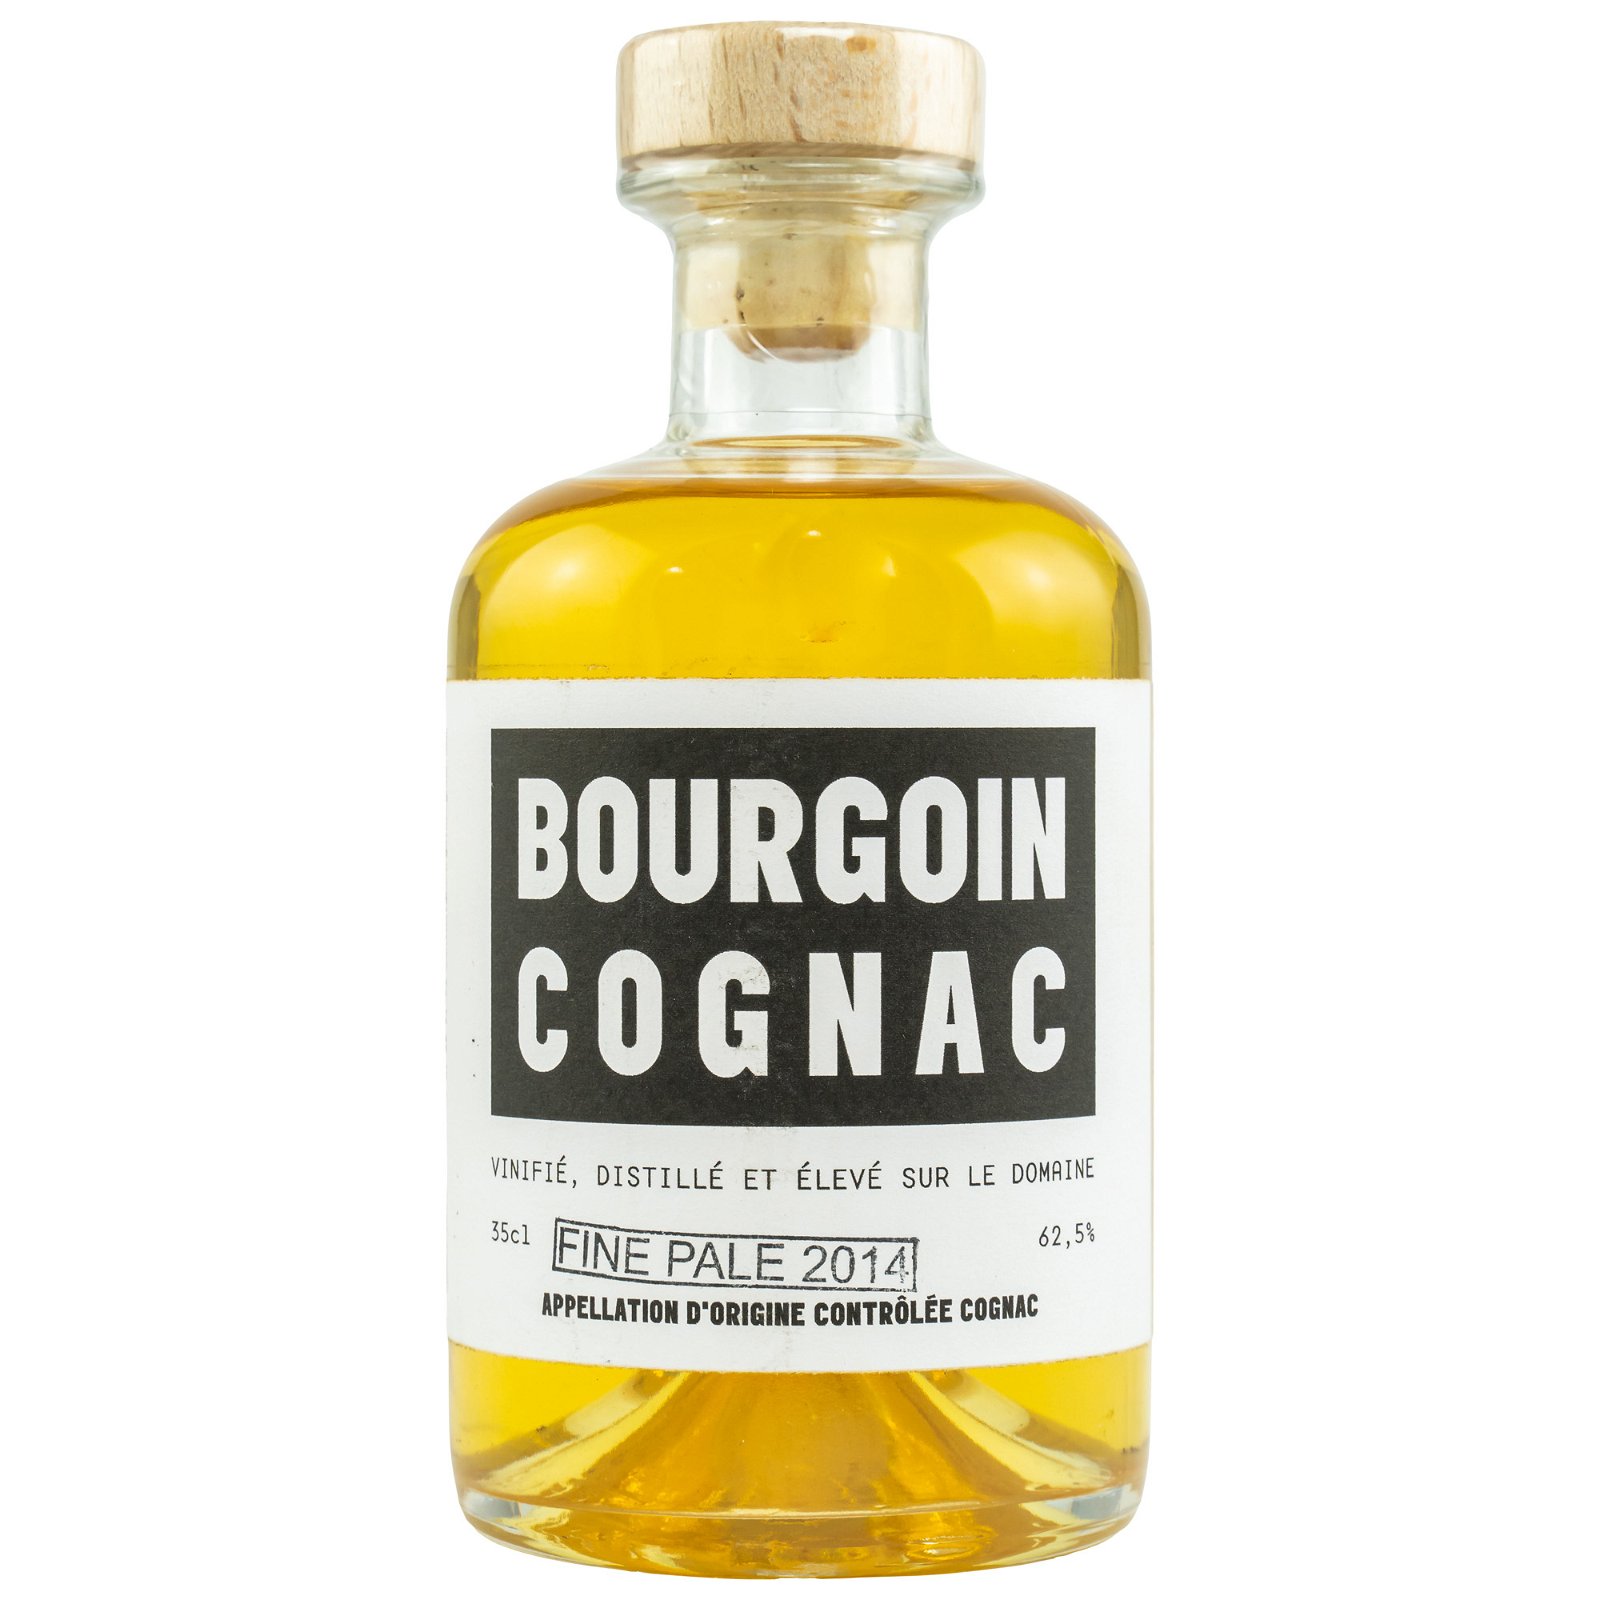 Bourgoin Cognac Fine Pale 2014 (350ml)